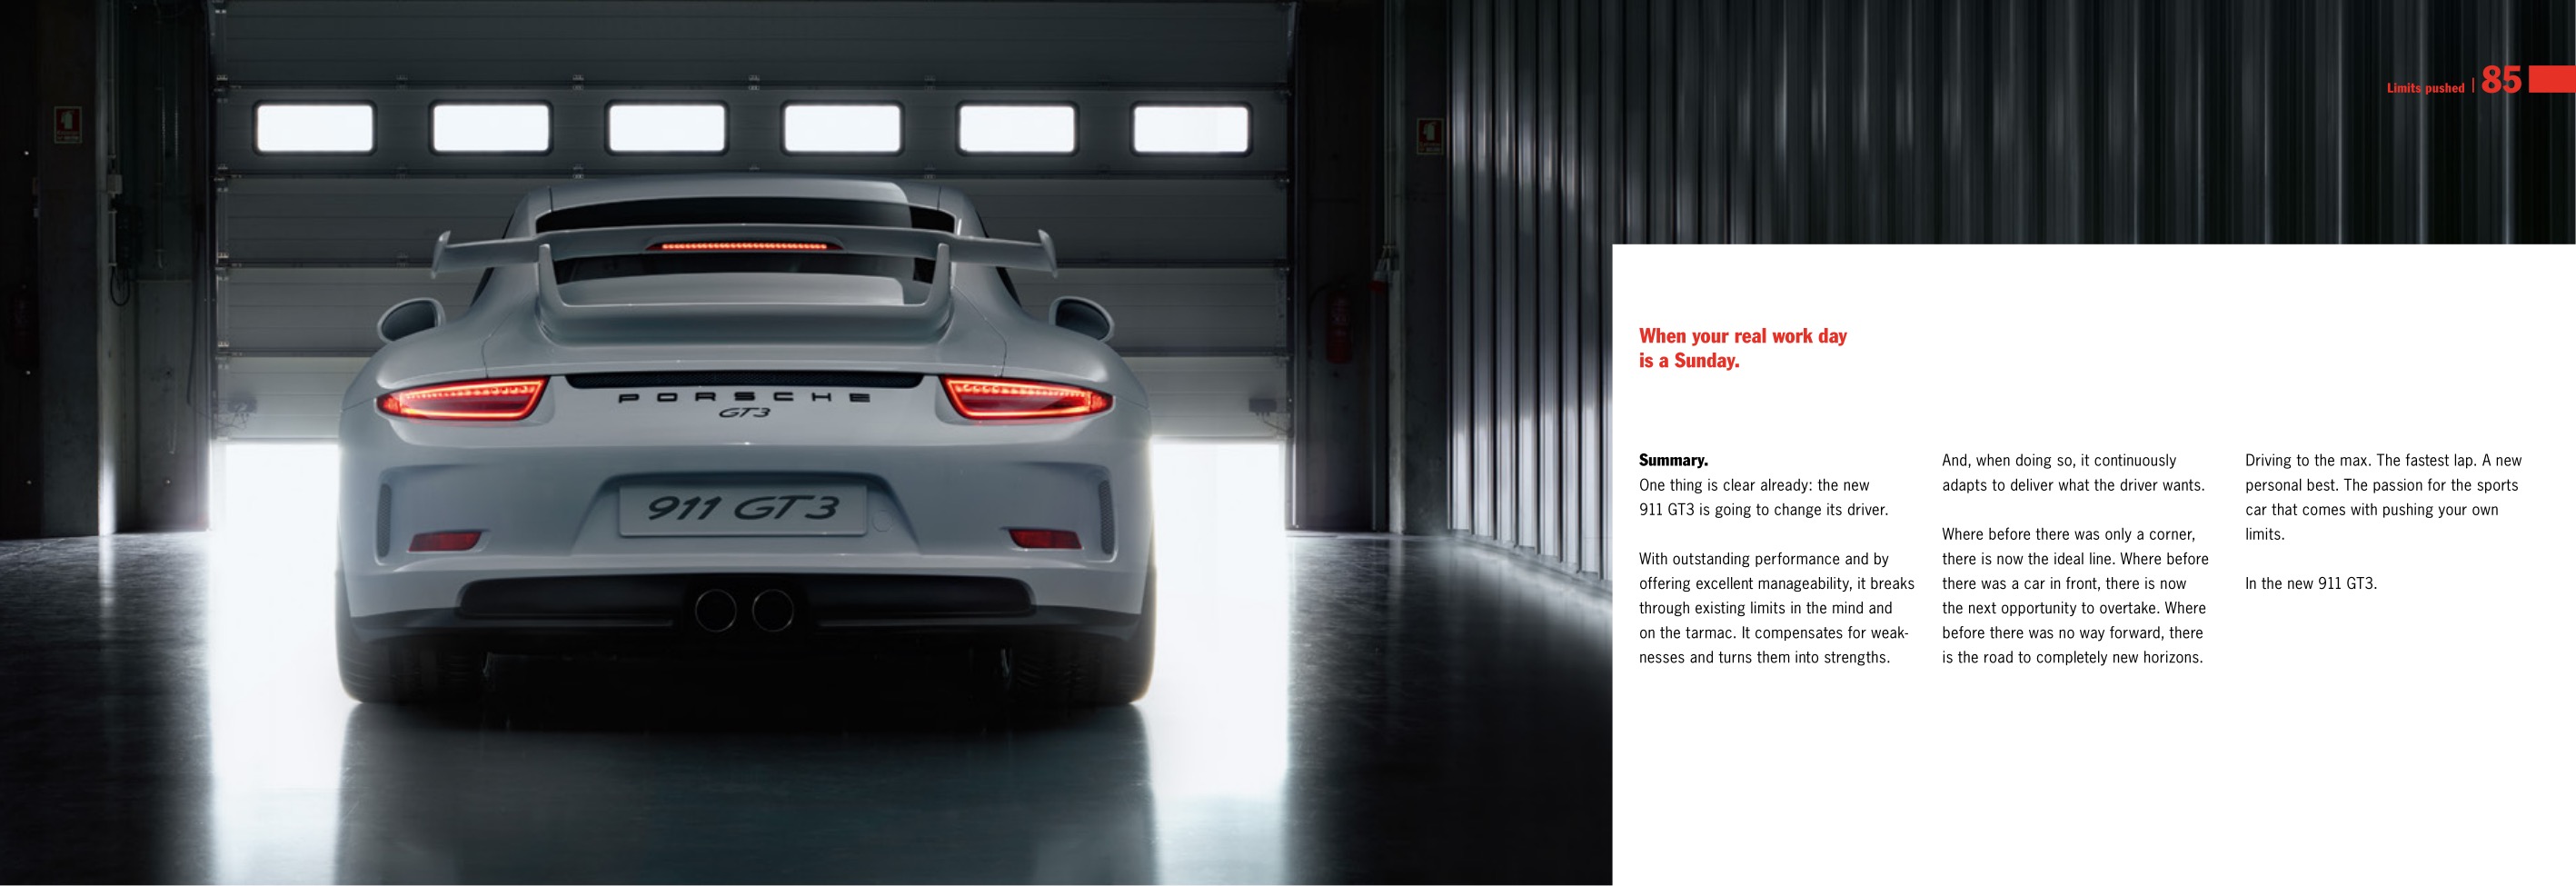 2014 Porsche 911 GT3 Brochure Page 44